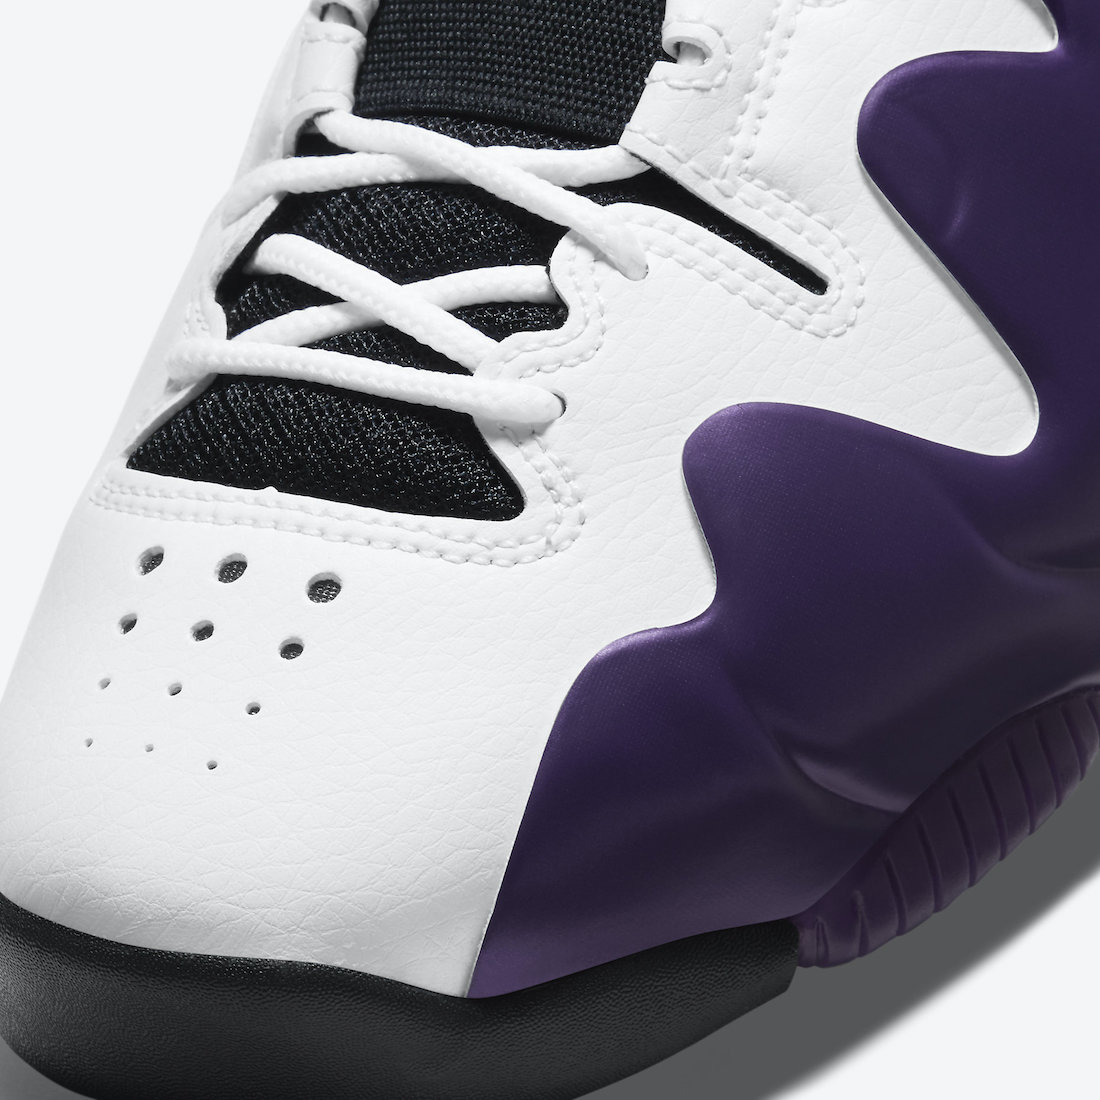 Nike-Air-Penny-3-III-Eggplant-CT2809-500-Release-Date-6.jpg